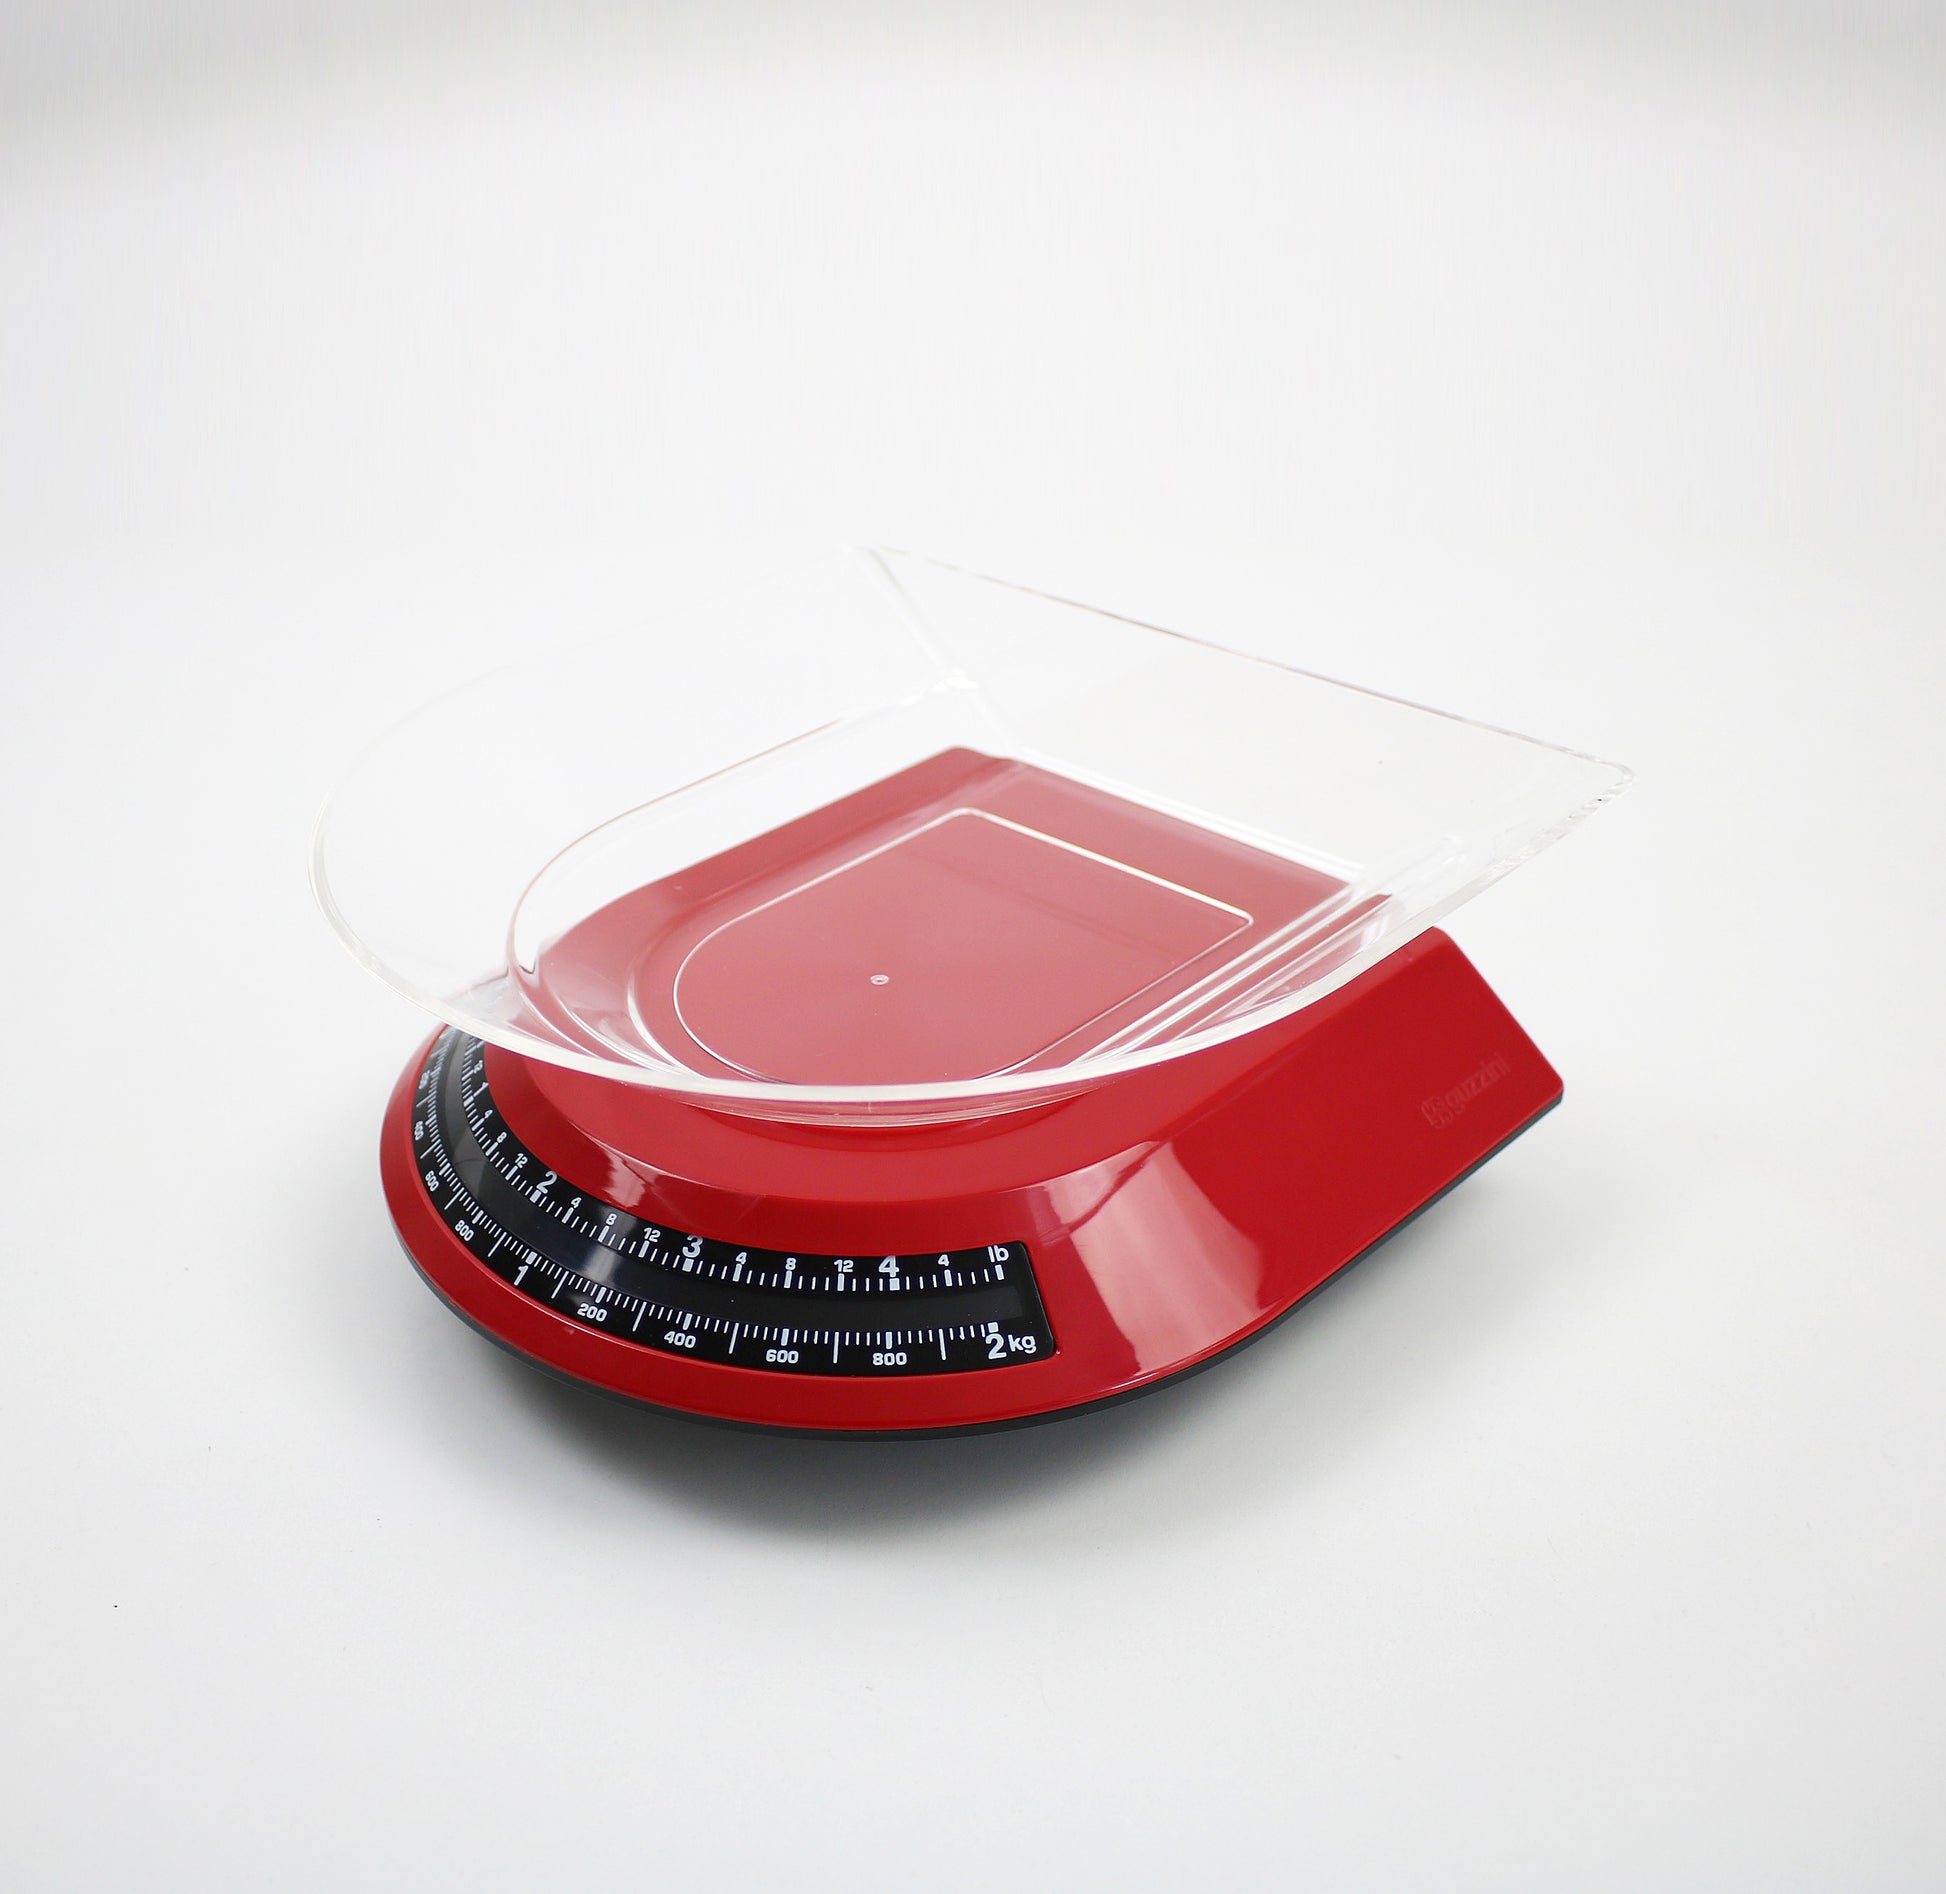 Furio Minuti for Guzzini 1980s Lady B postmodern kitchen scales red and black acrylic